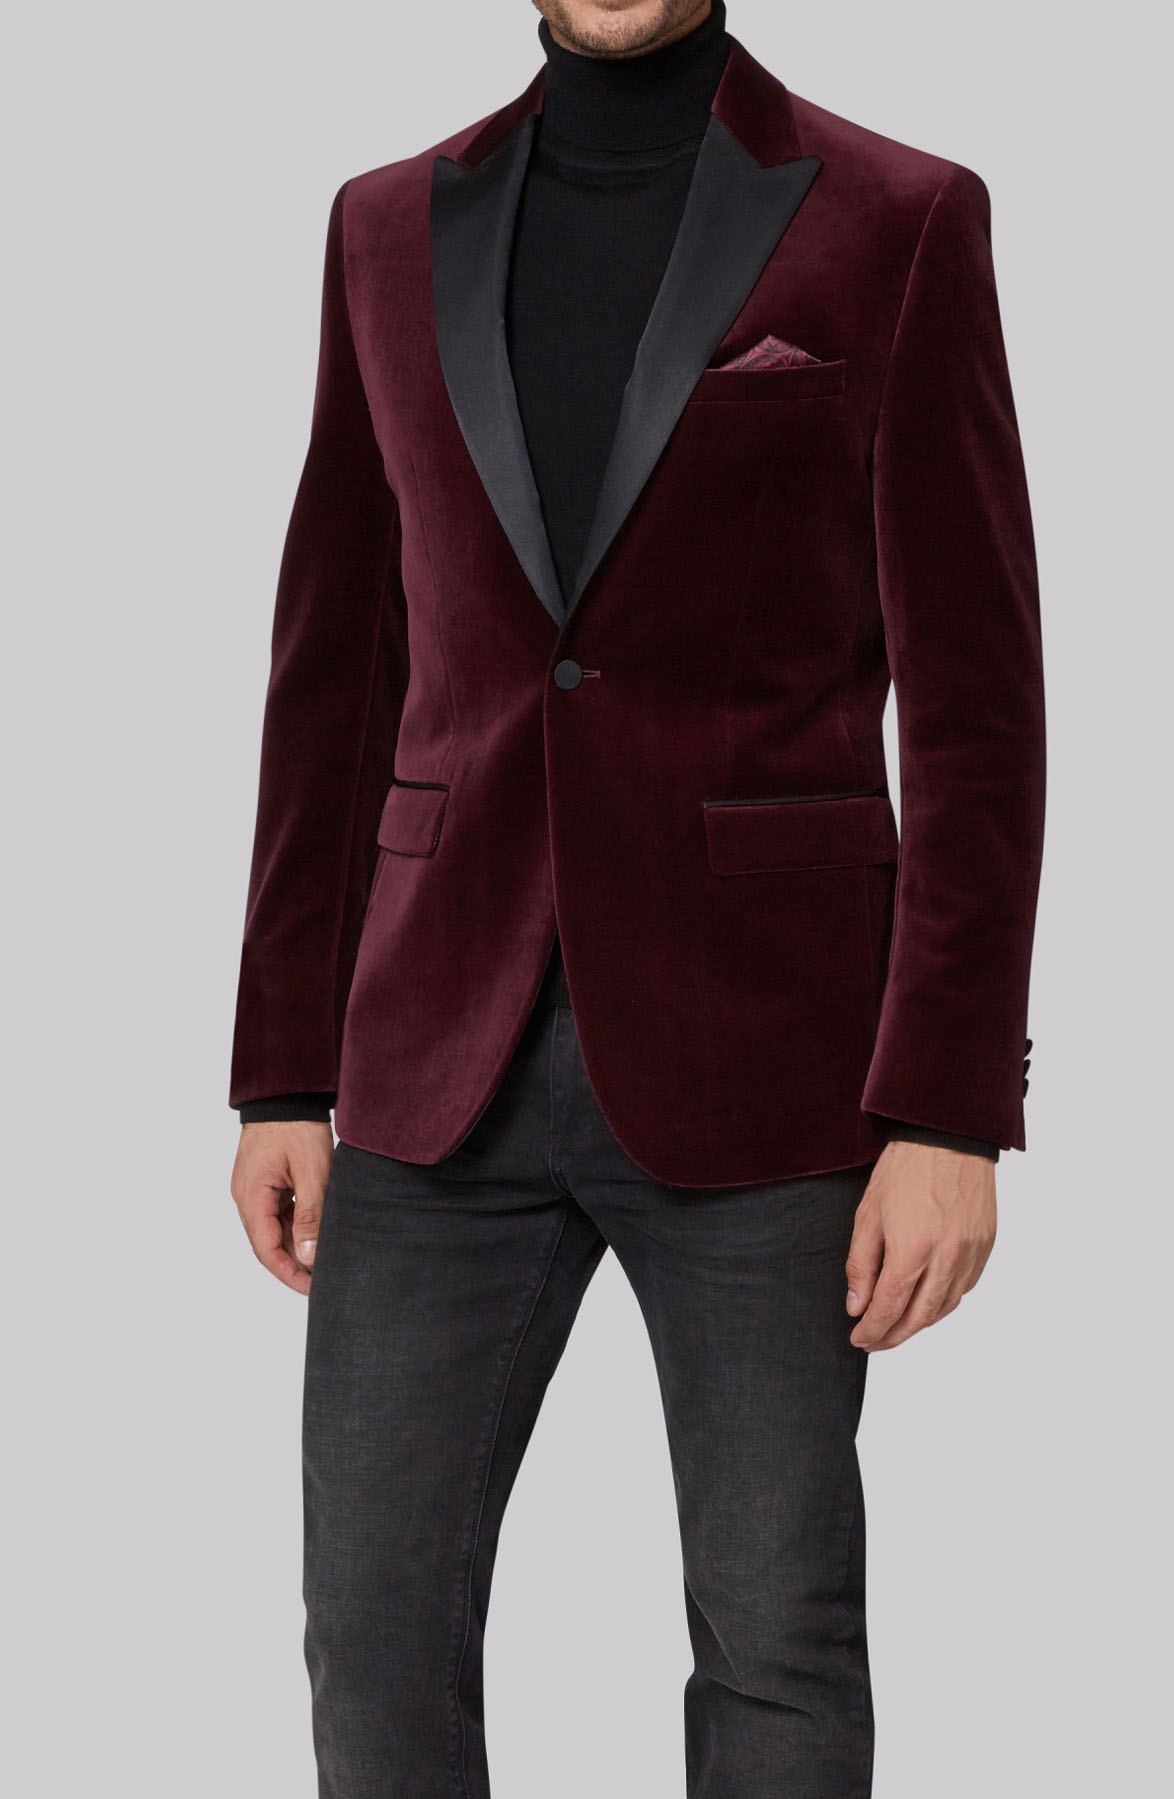 Burgundy Velvet Groom Tuxedo Set For Autumn/Winter Weddings Includes Custom  Jackets, Pants, Vest, And Tie From Coolman168, $80.41 | DHgate.Com